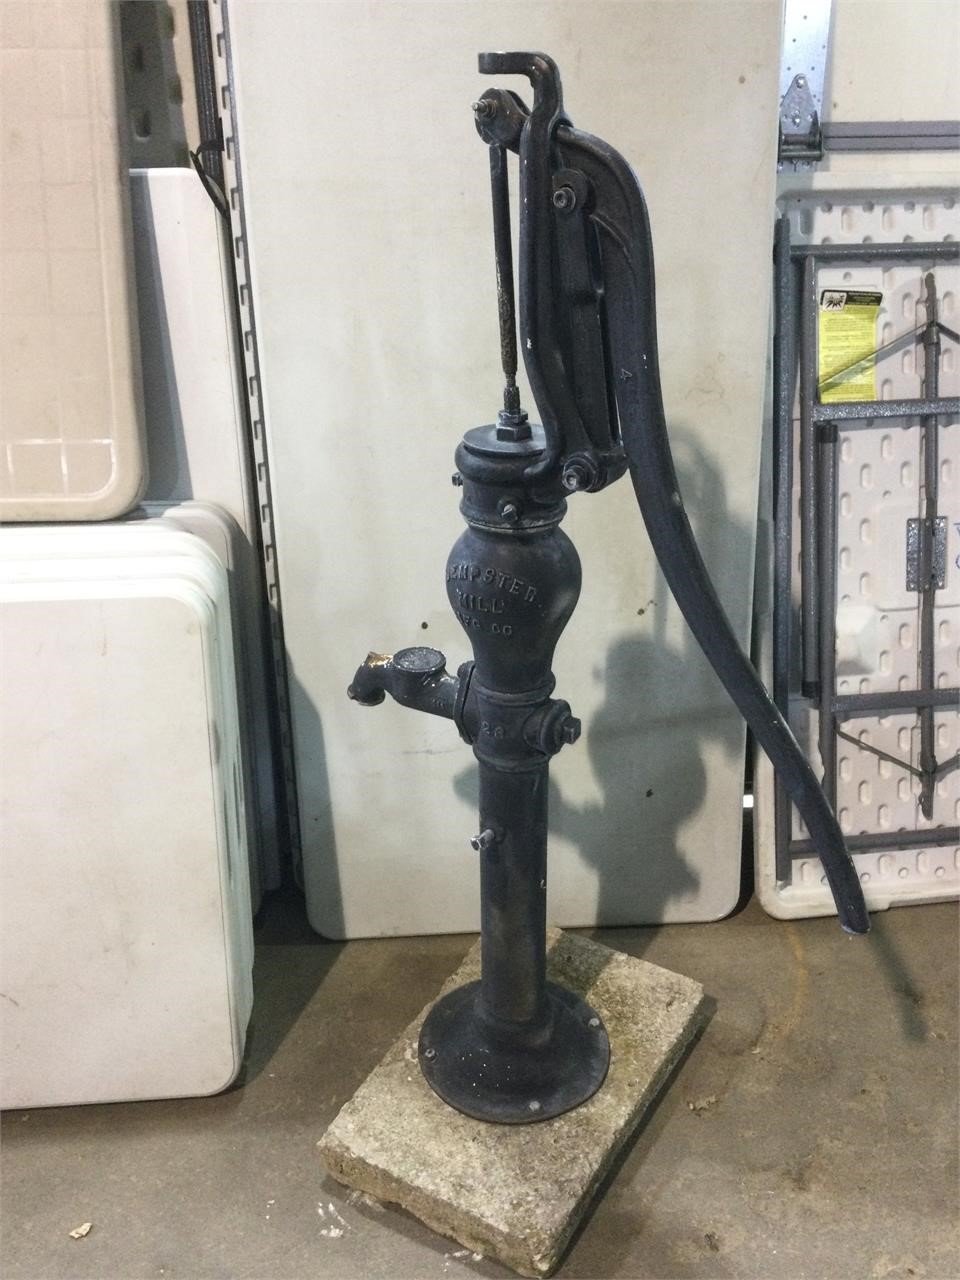 Dempster Mill MFG. Co. Water Well Hand Pump, 51”T